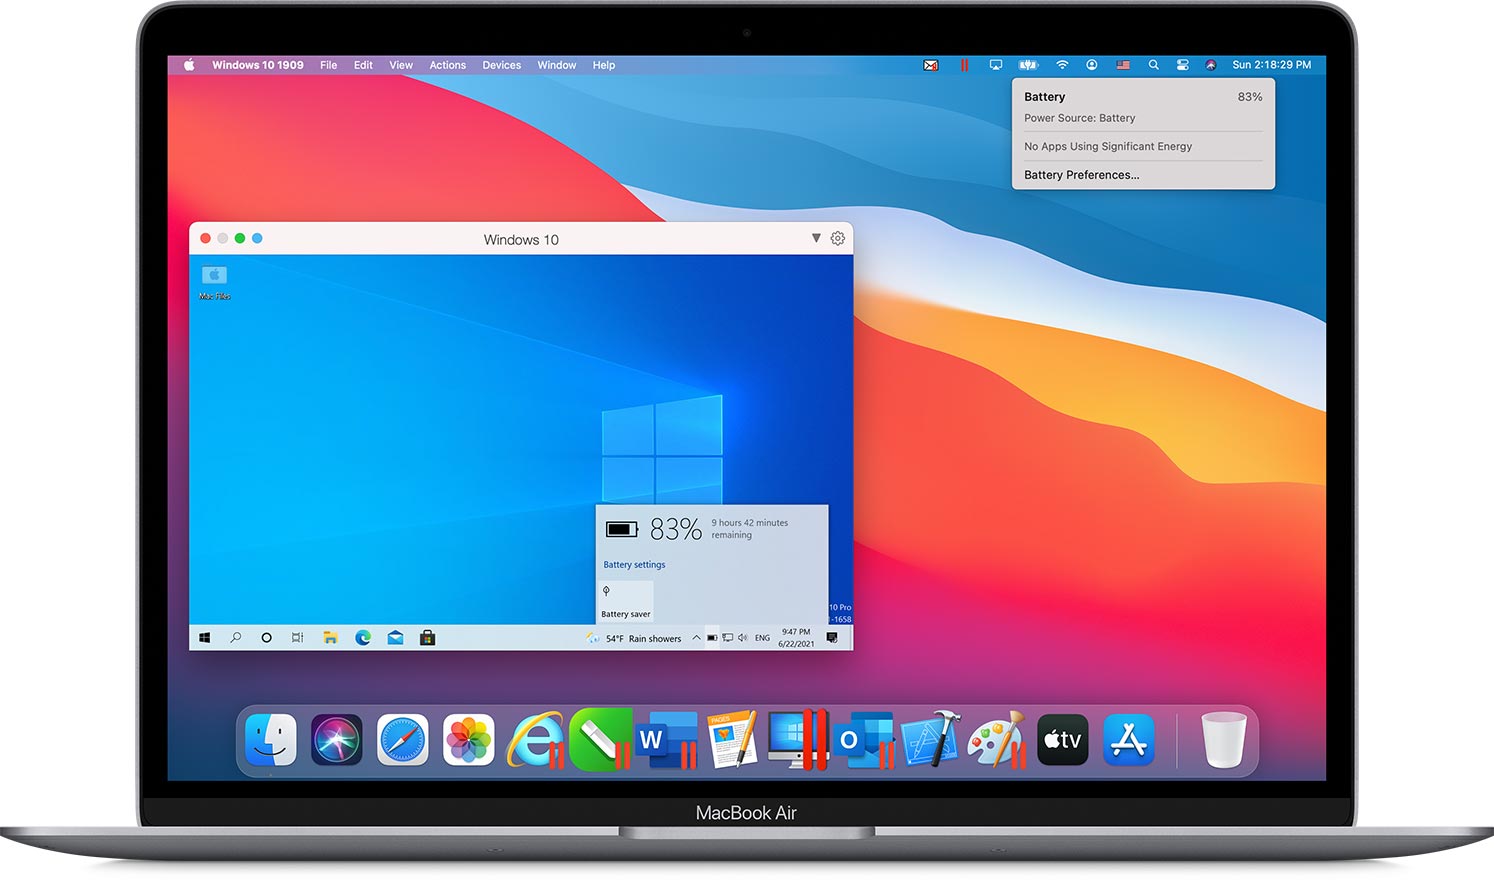 parallels desktop 9 for mac mac windows emulator